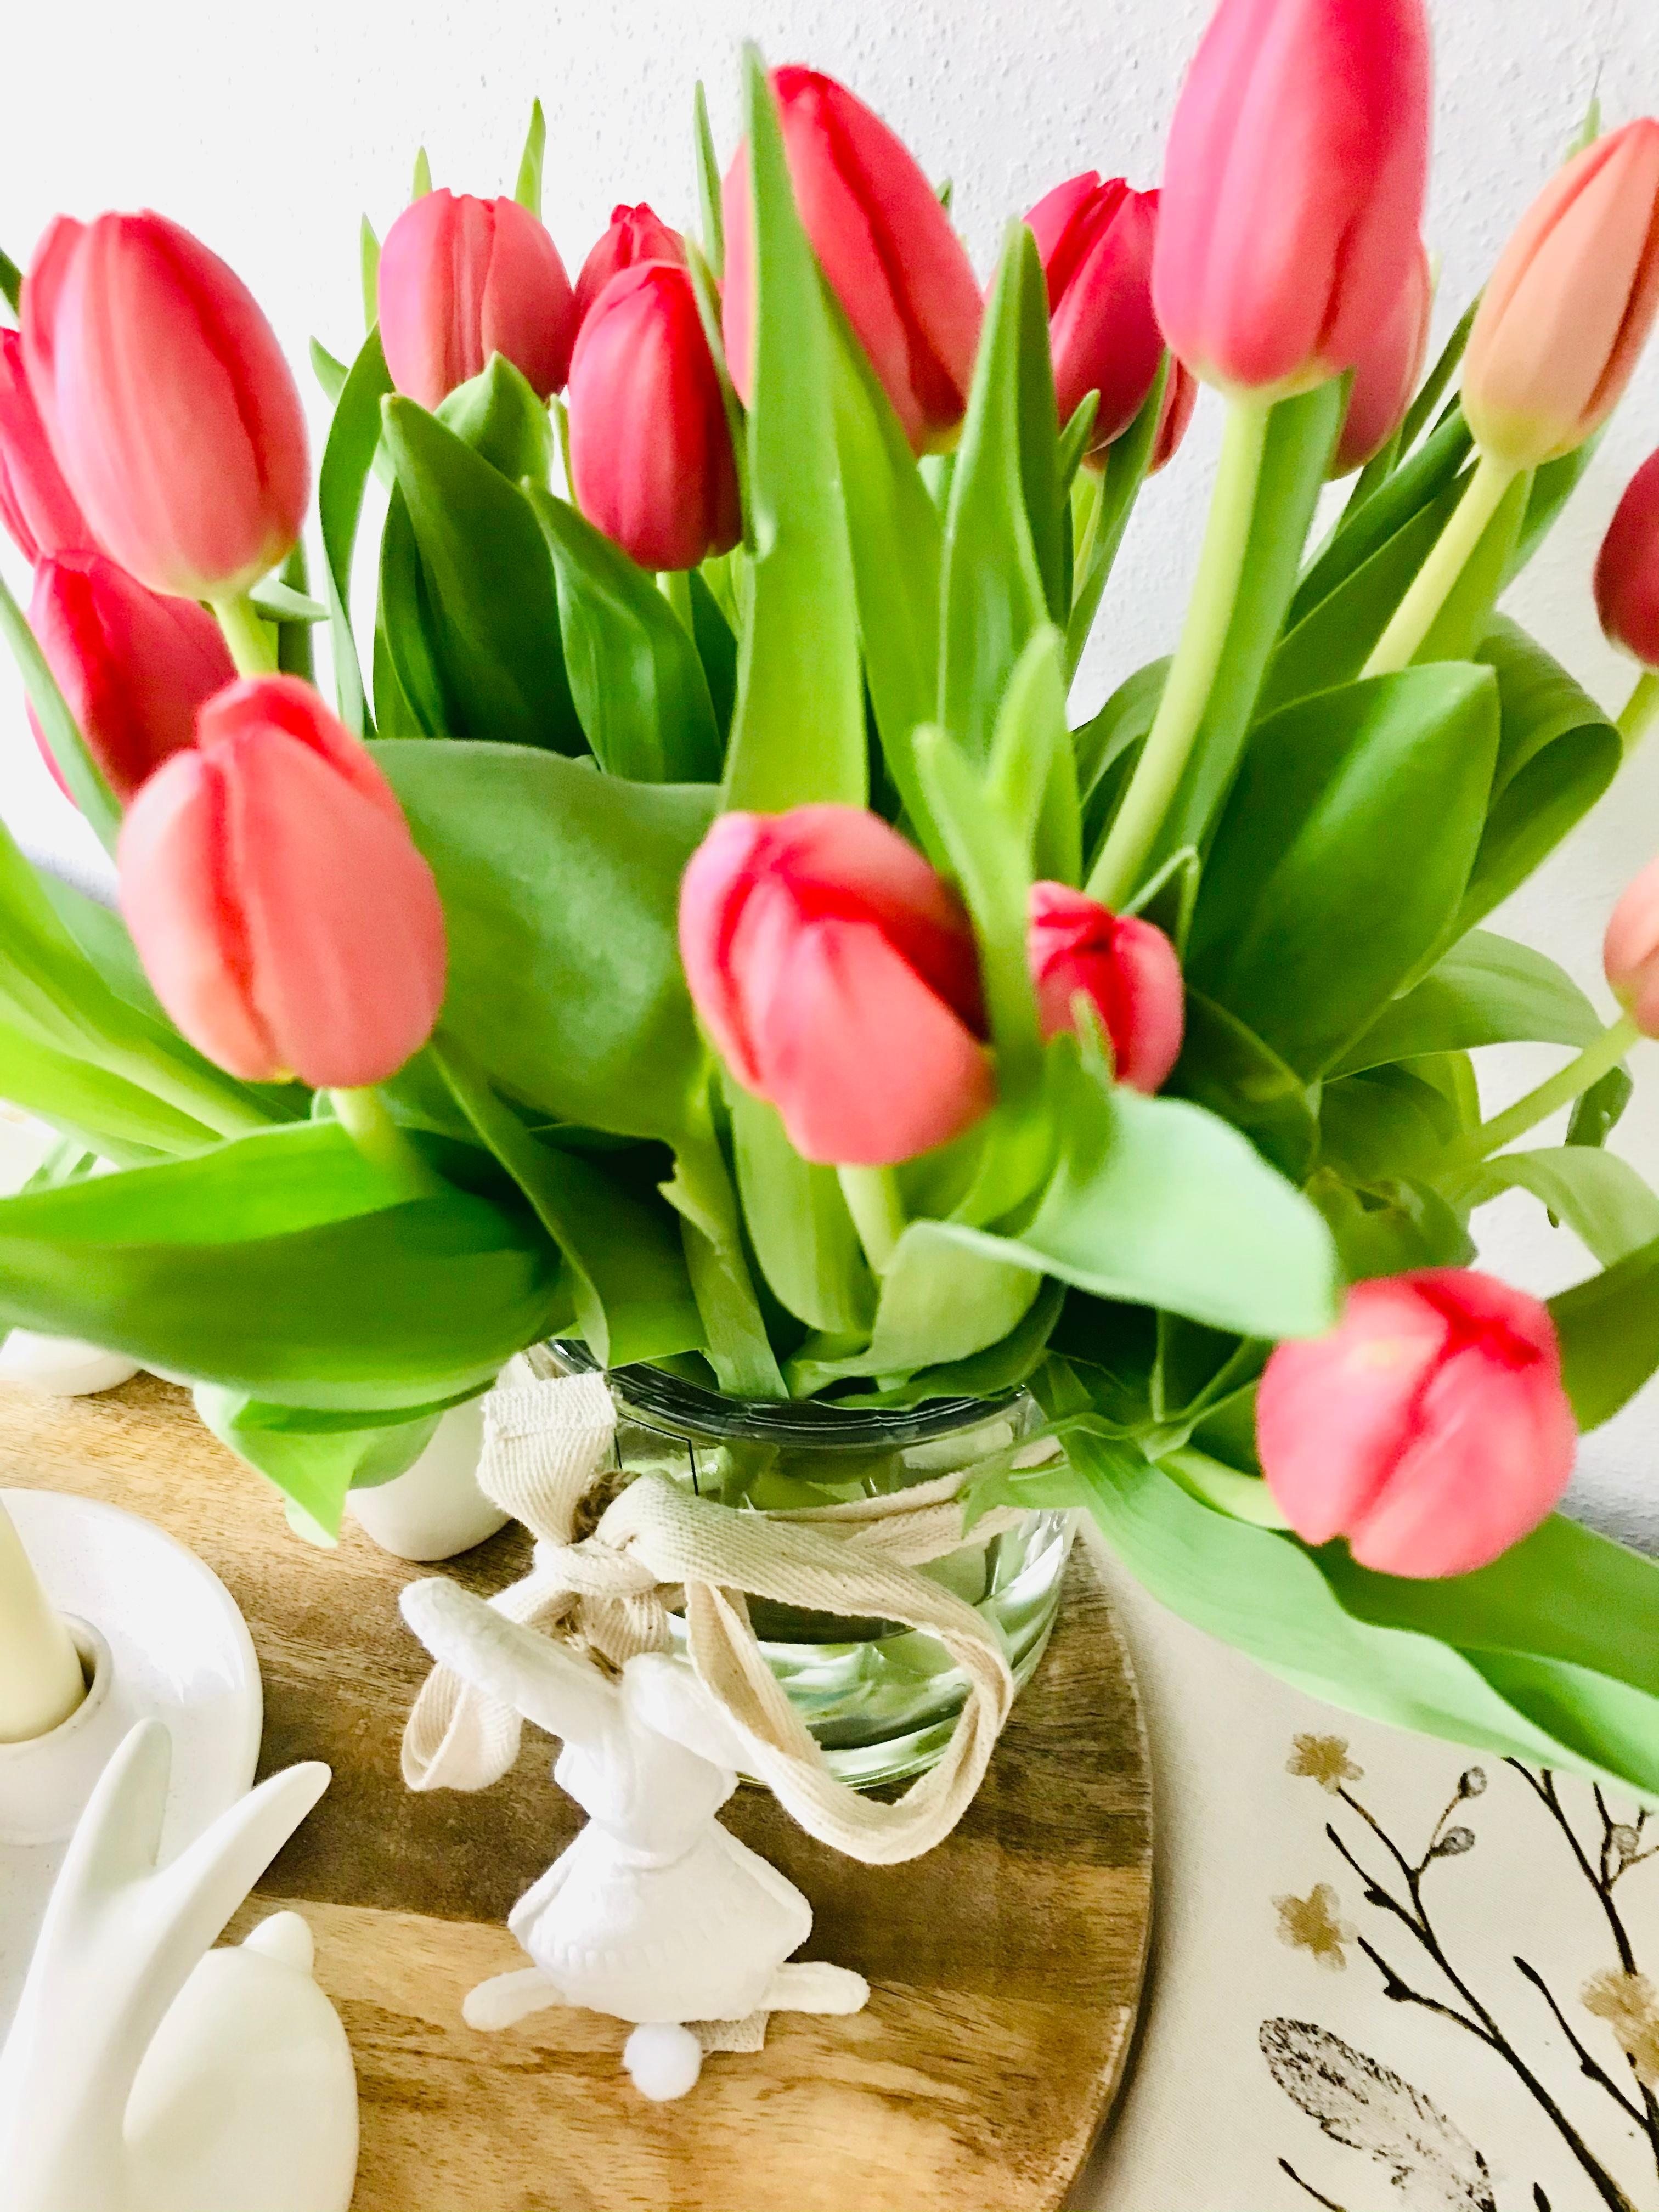 #freshflowerfriday #happyweekend 
Große Tulpenliebe 